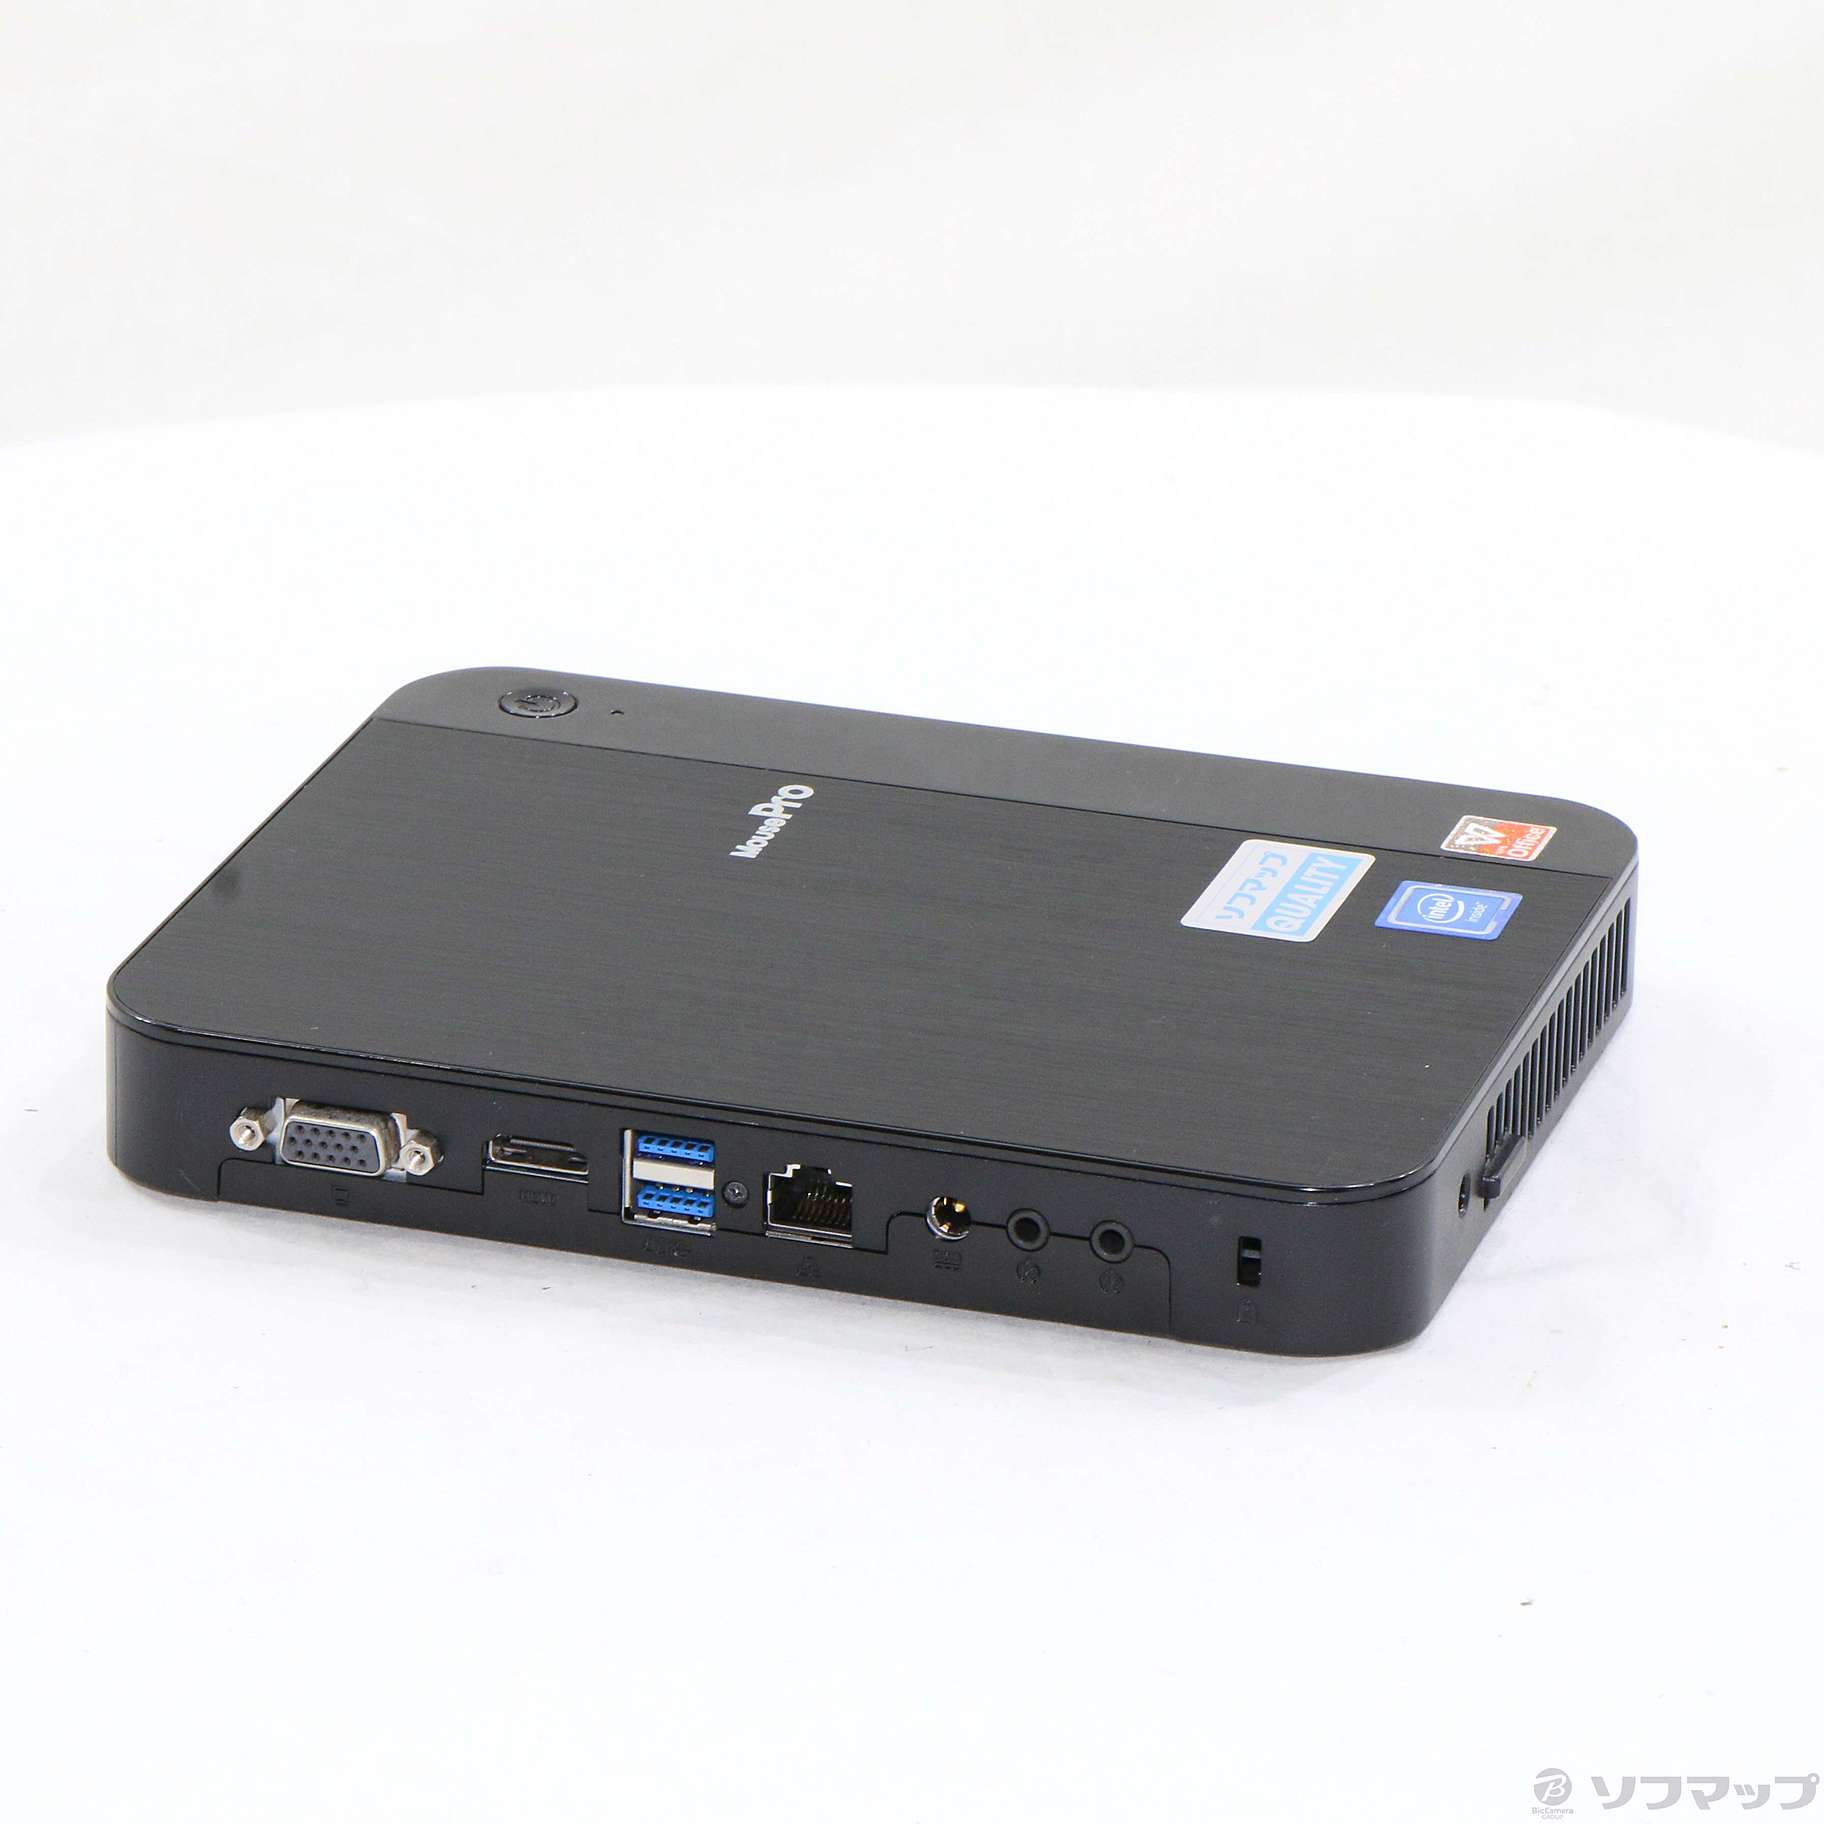 LUV MACHINES mini 91S-S5 Windows 10 Home - ミニPC